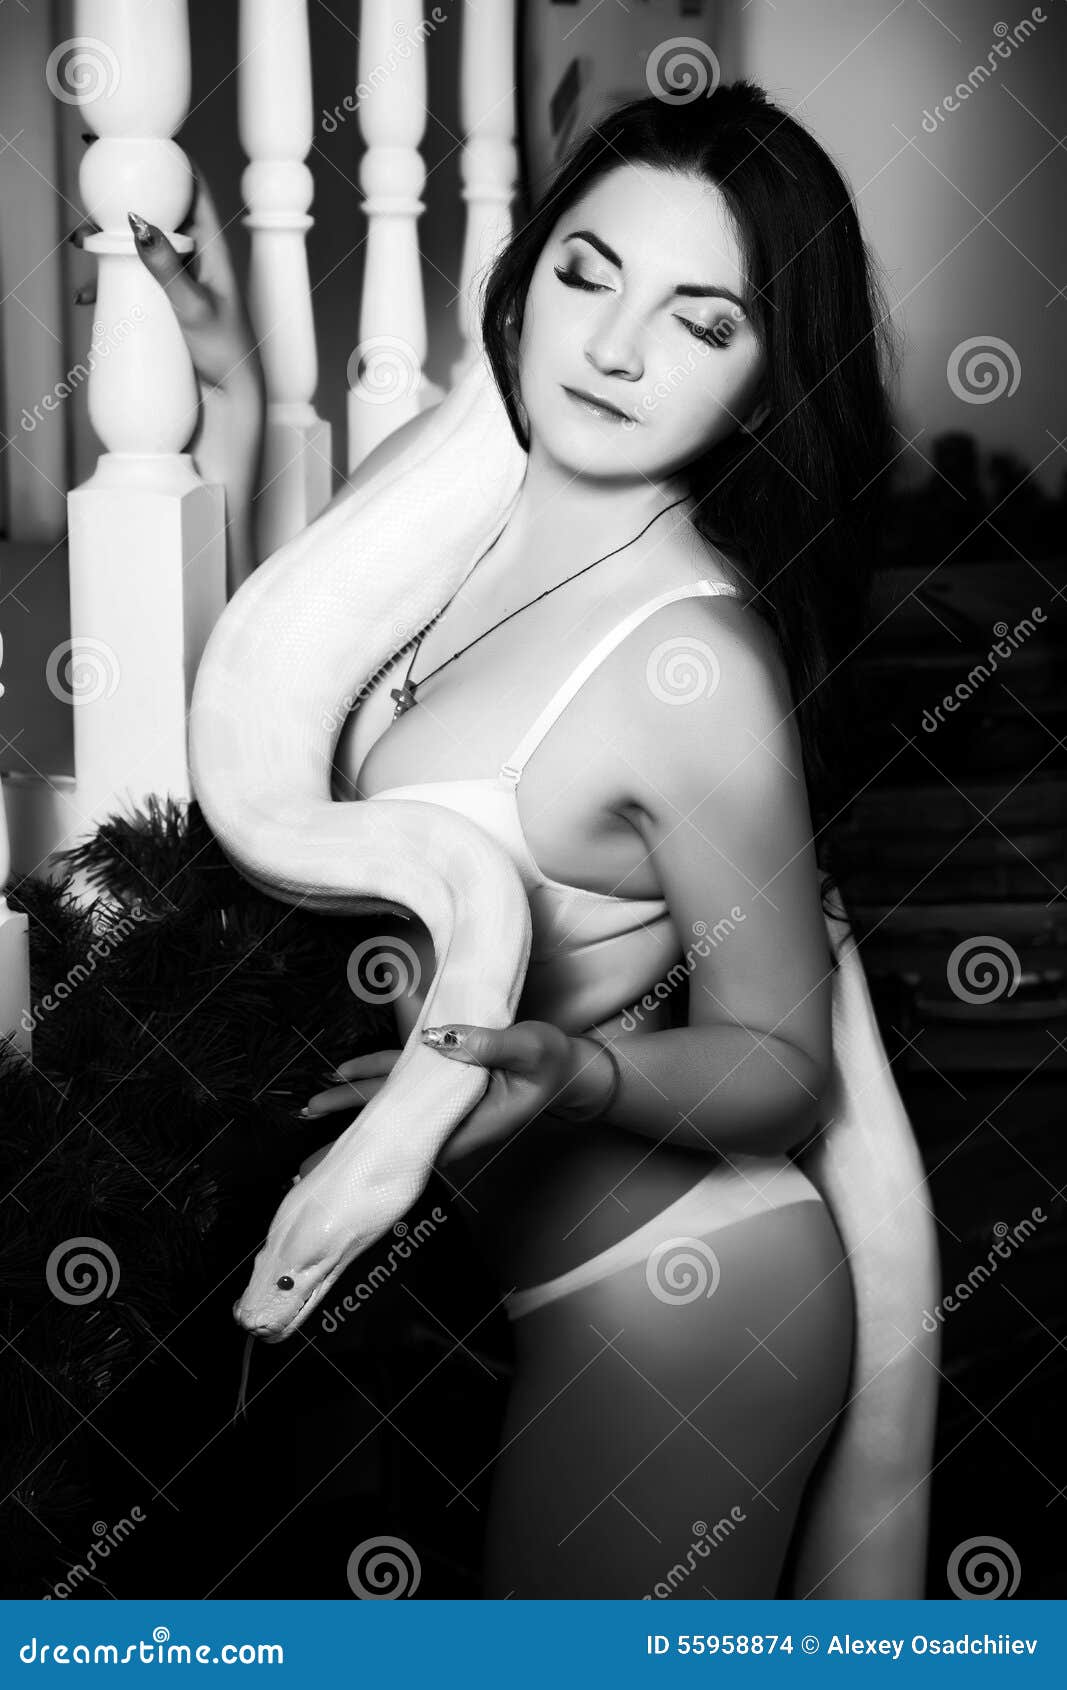 Black and white old erotic art photo